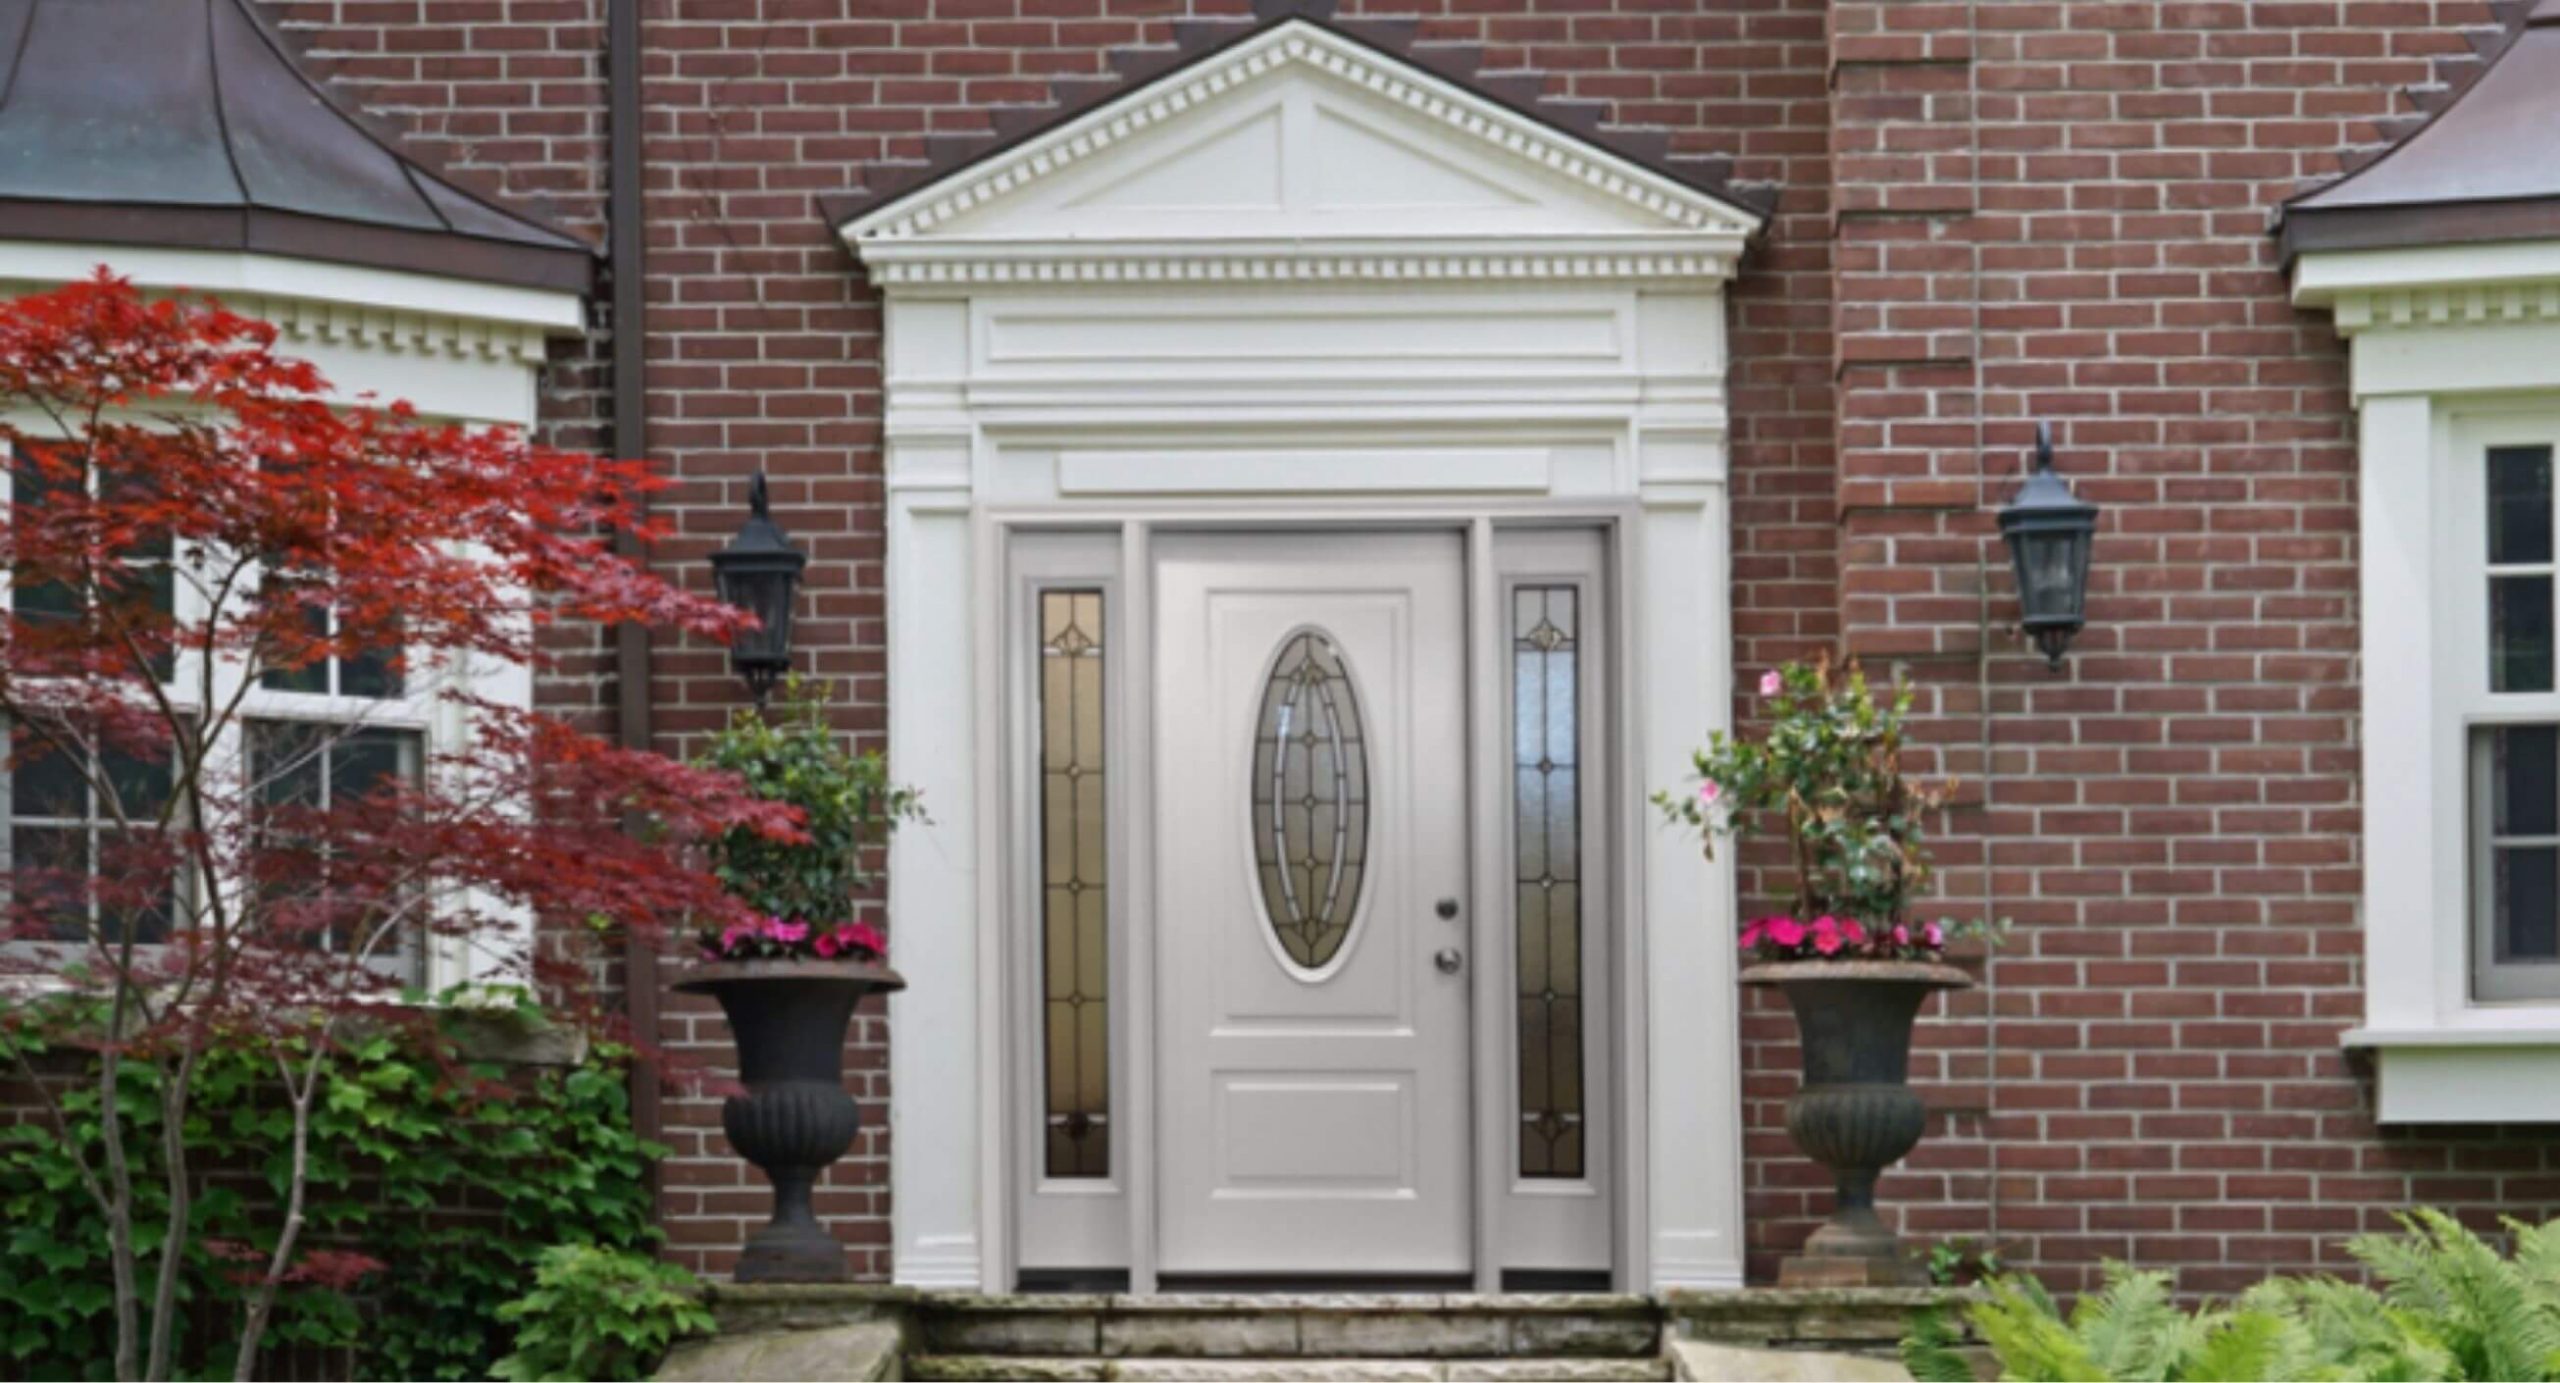 White fiberglass door accentuated with classic columns